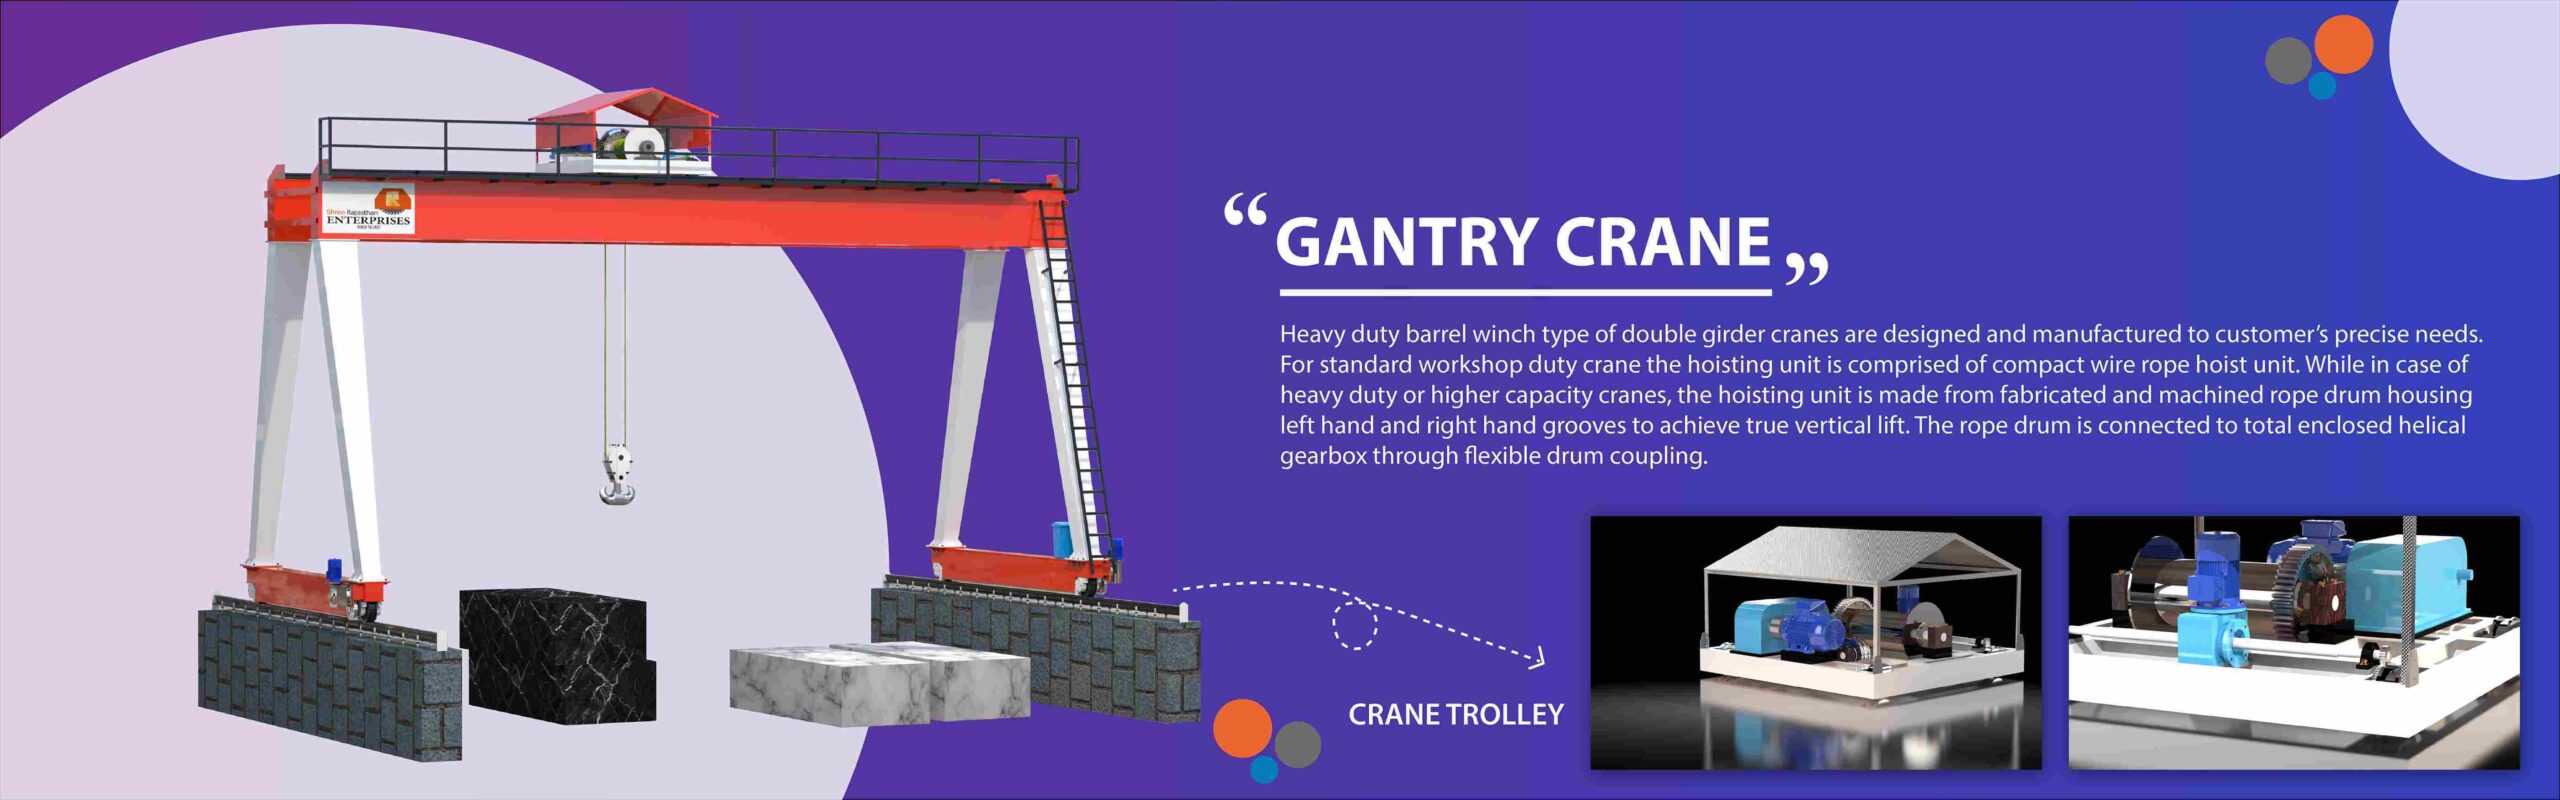 gantry crane-01_11zon (1)_11zon (1)